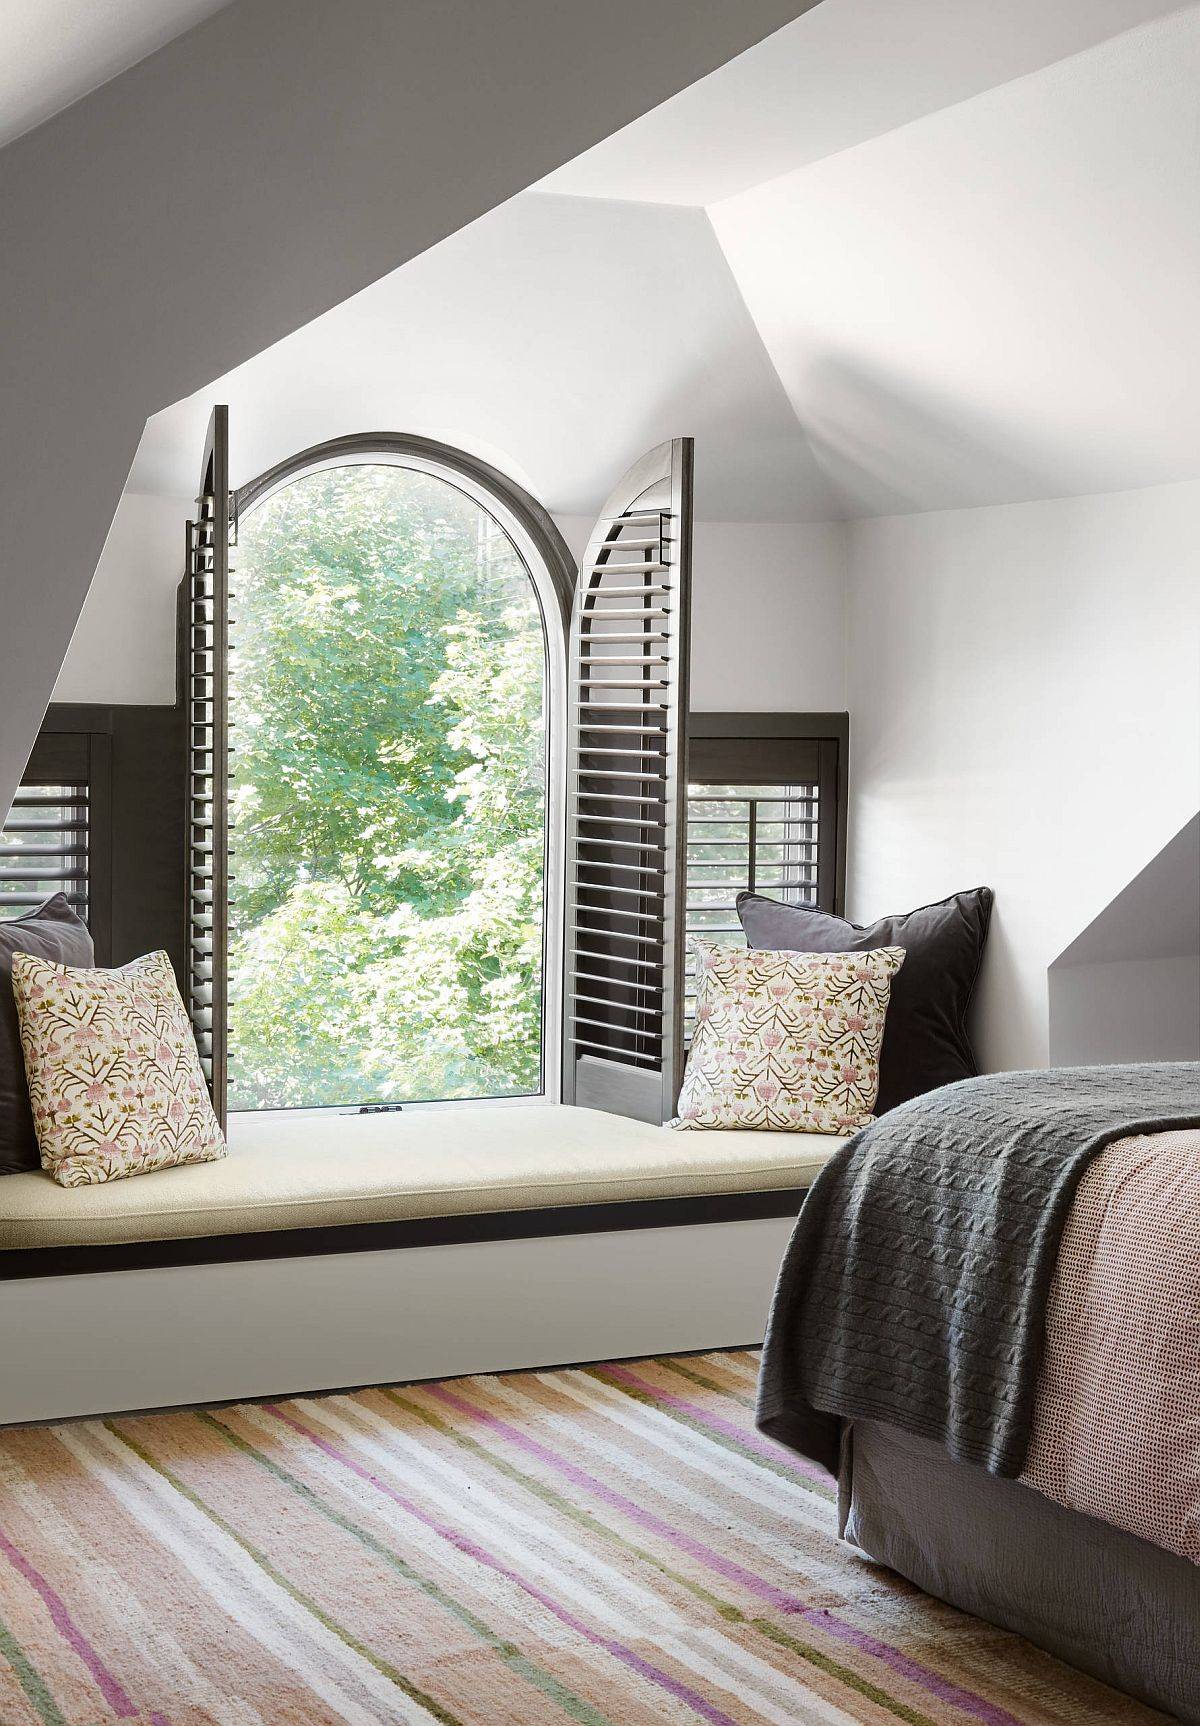 Unique window design makes this bedroom window seat extra special